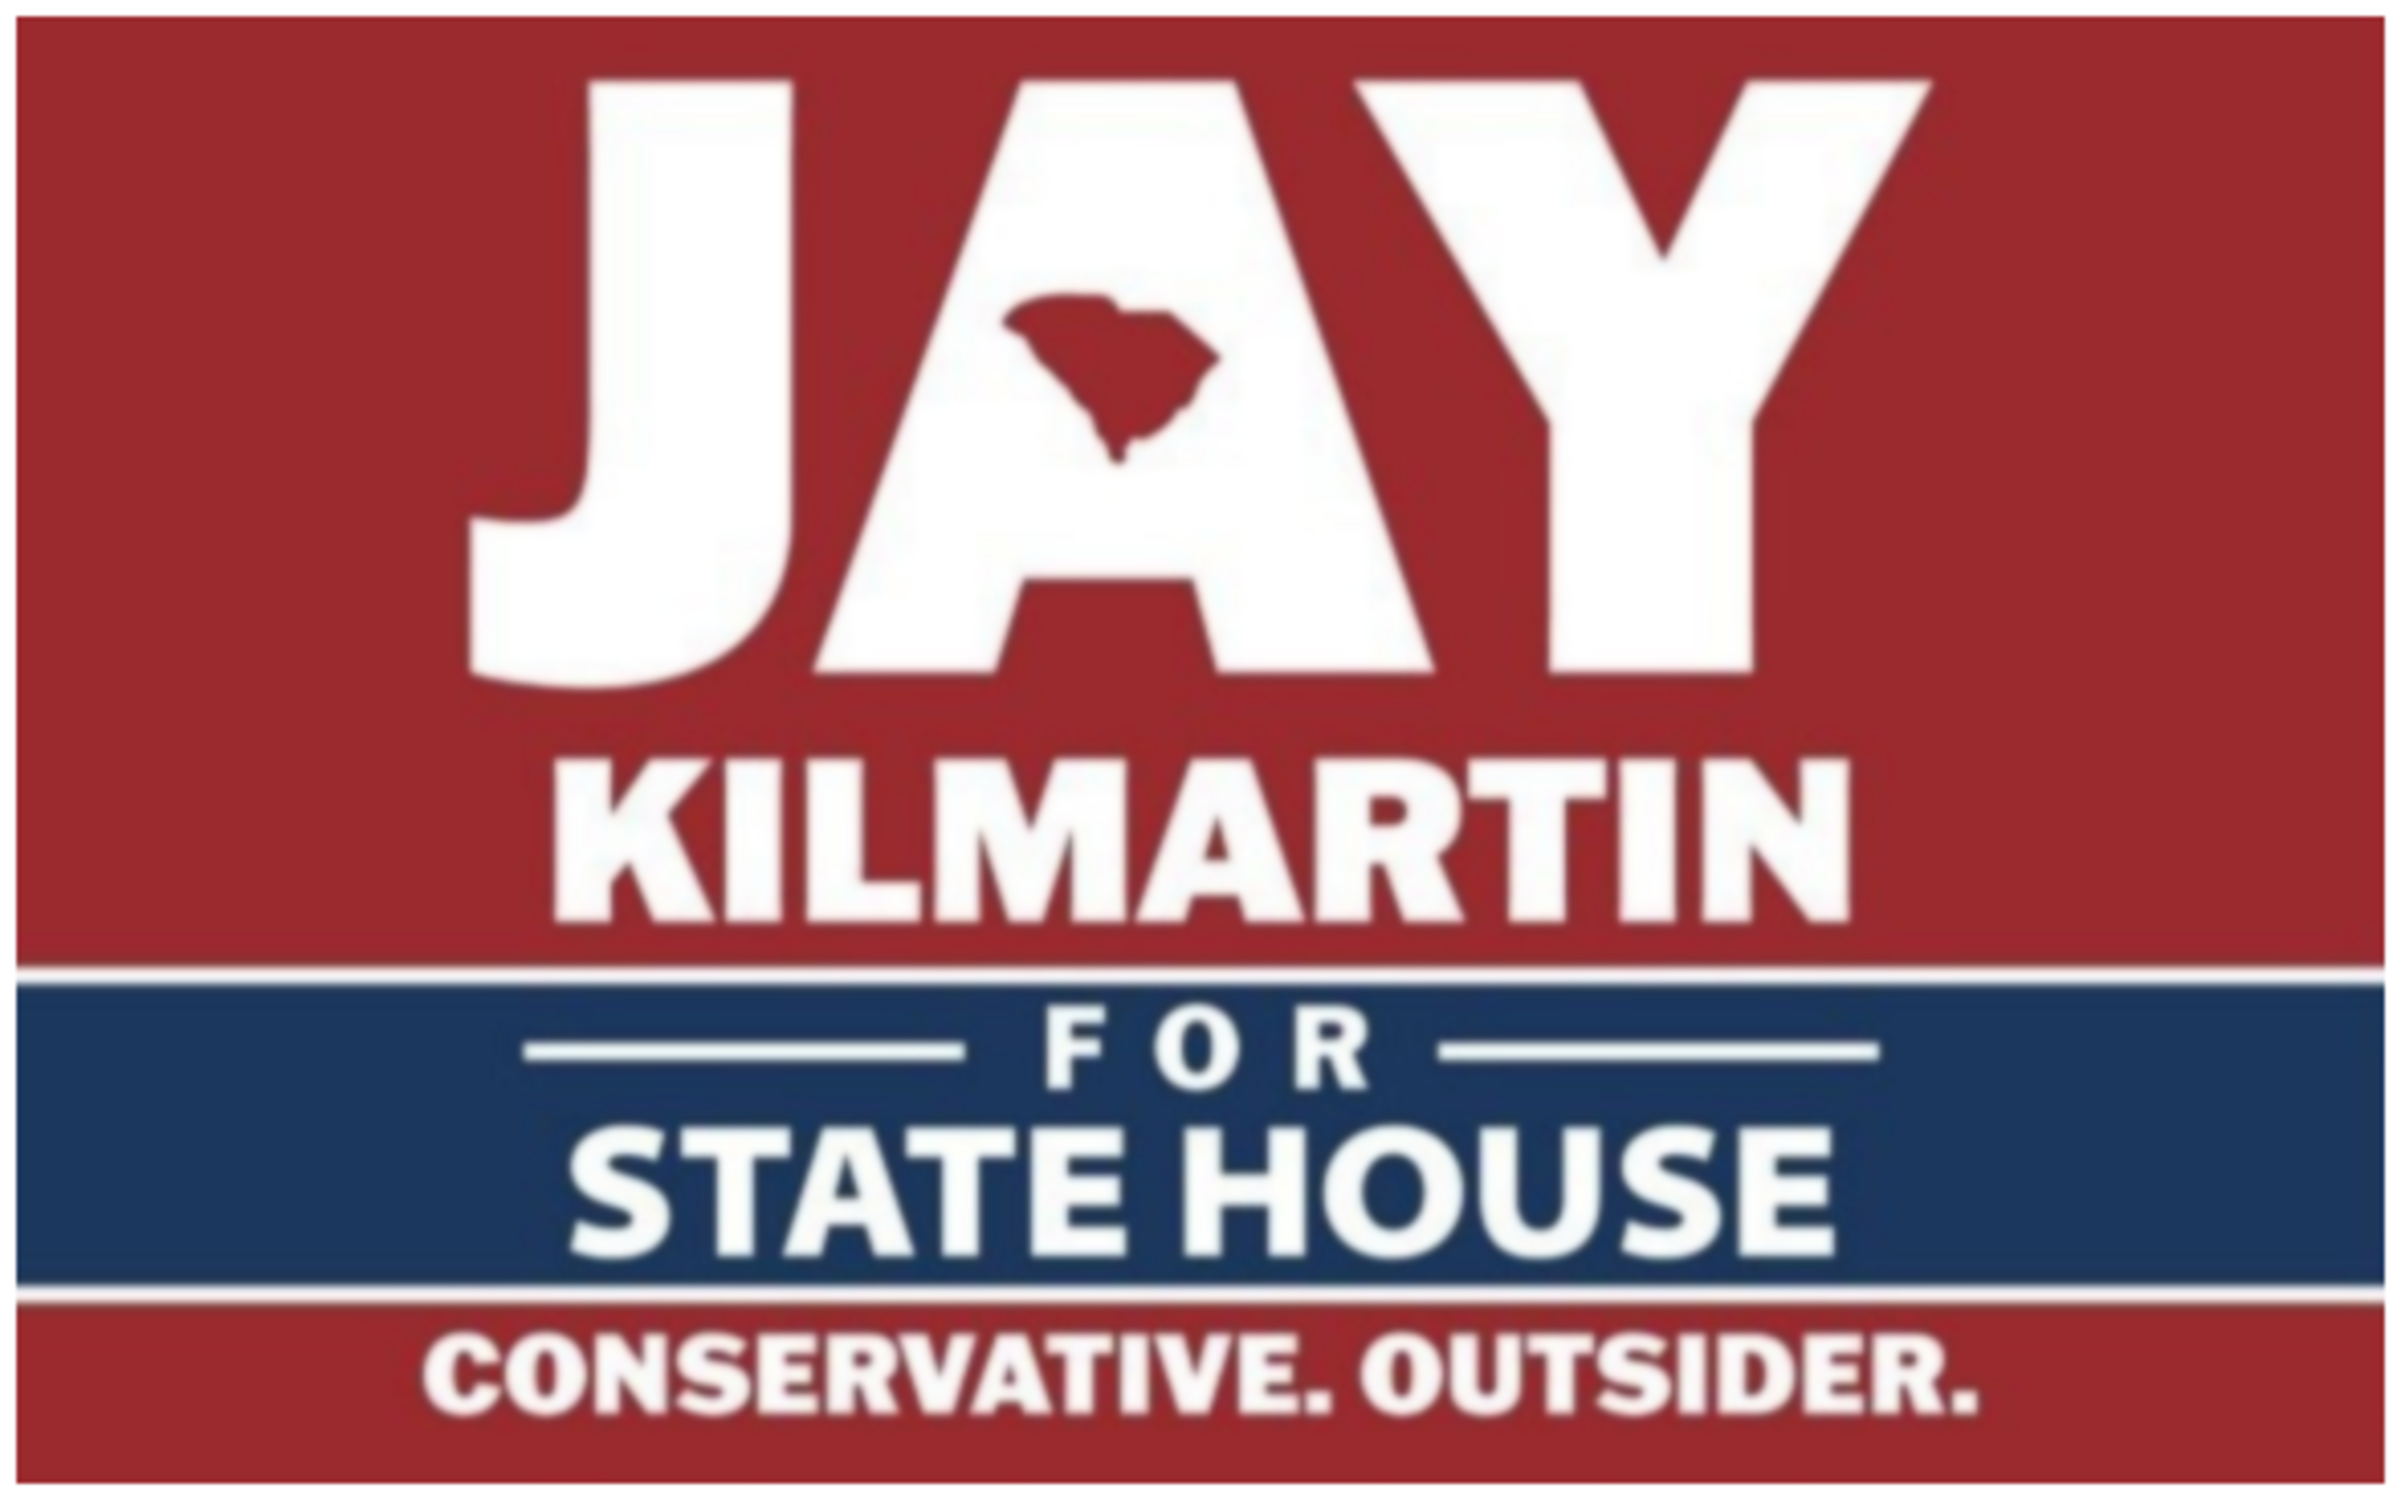 Jay Kilmartin For SC State House - Conservative. Outsider.